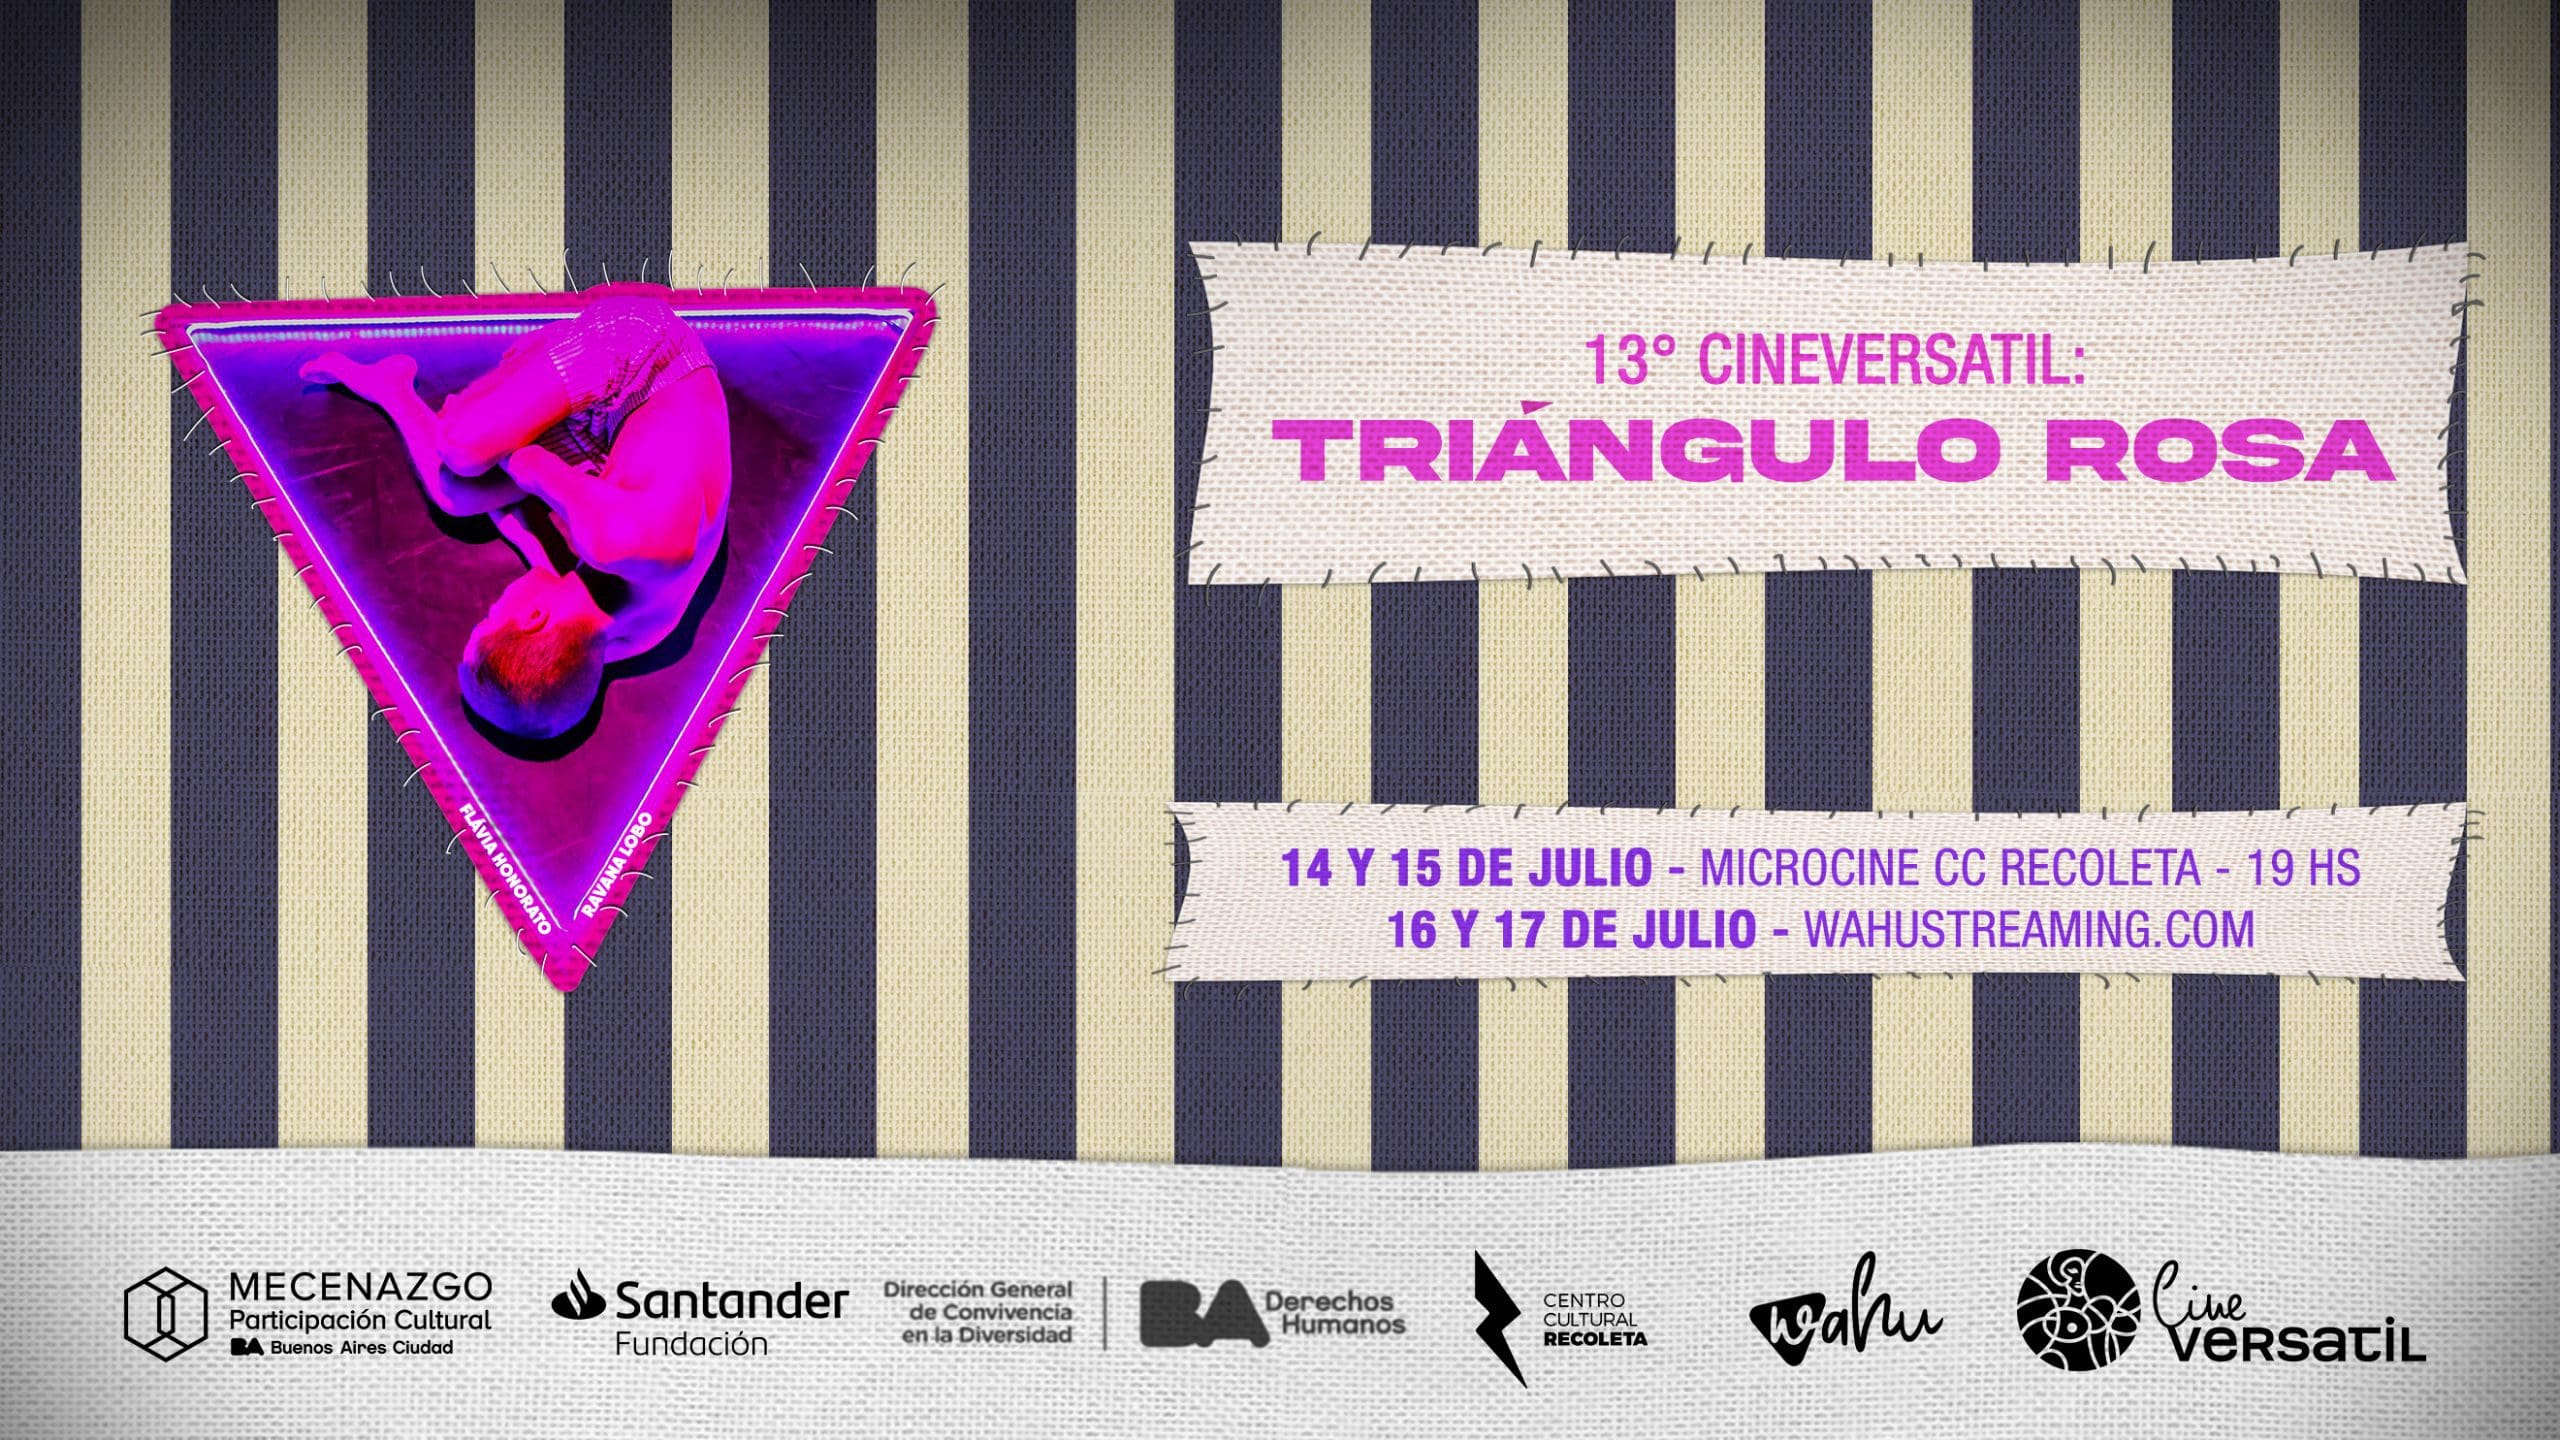 13th CINEVERSATIL – LGBTQIA+ Film Festival in Buenos Aires